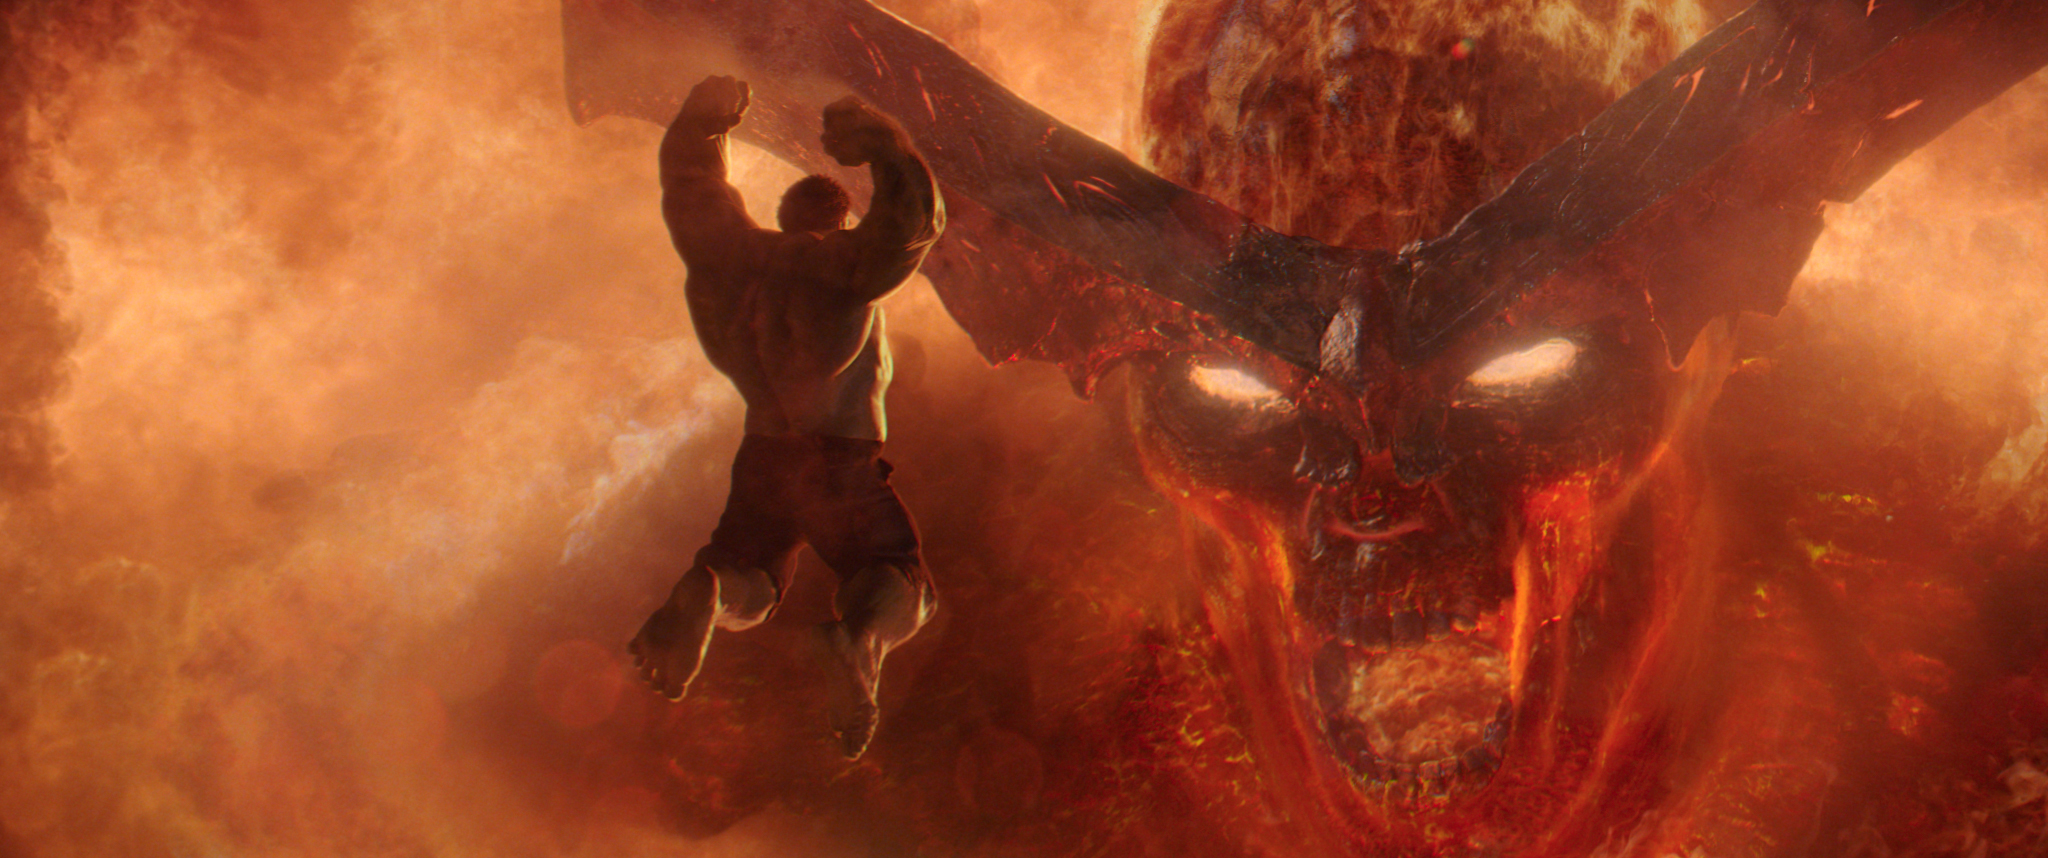 Thor Ragnarok Hulk Jumping Fire Demon Screaming Thor Marvel Cinematic Universe Surtur 2048x858